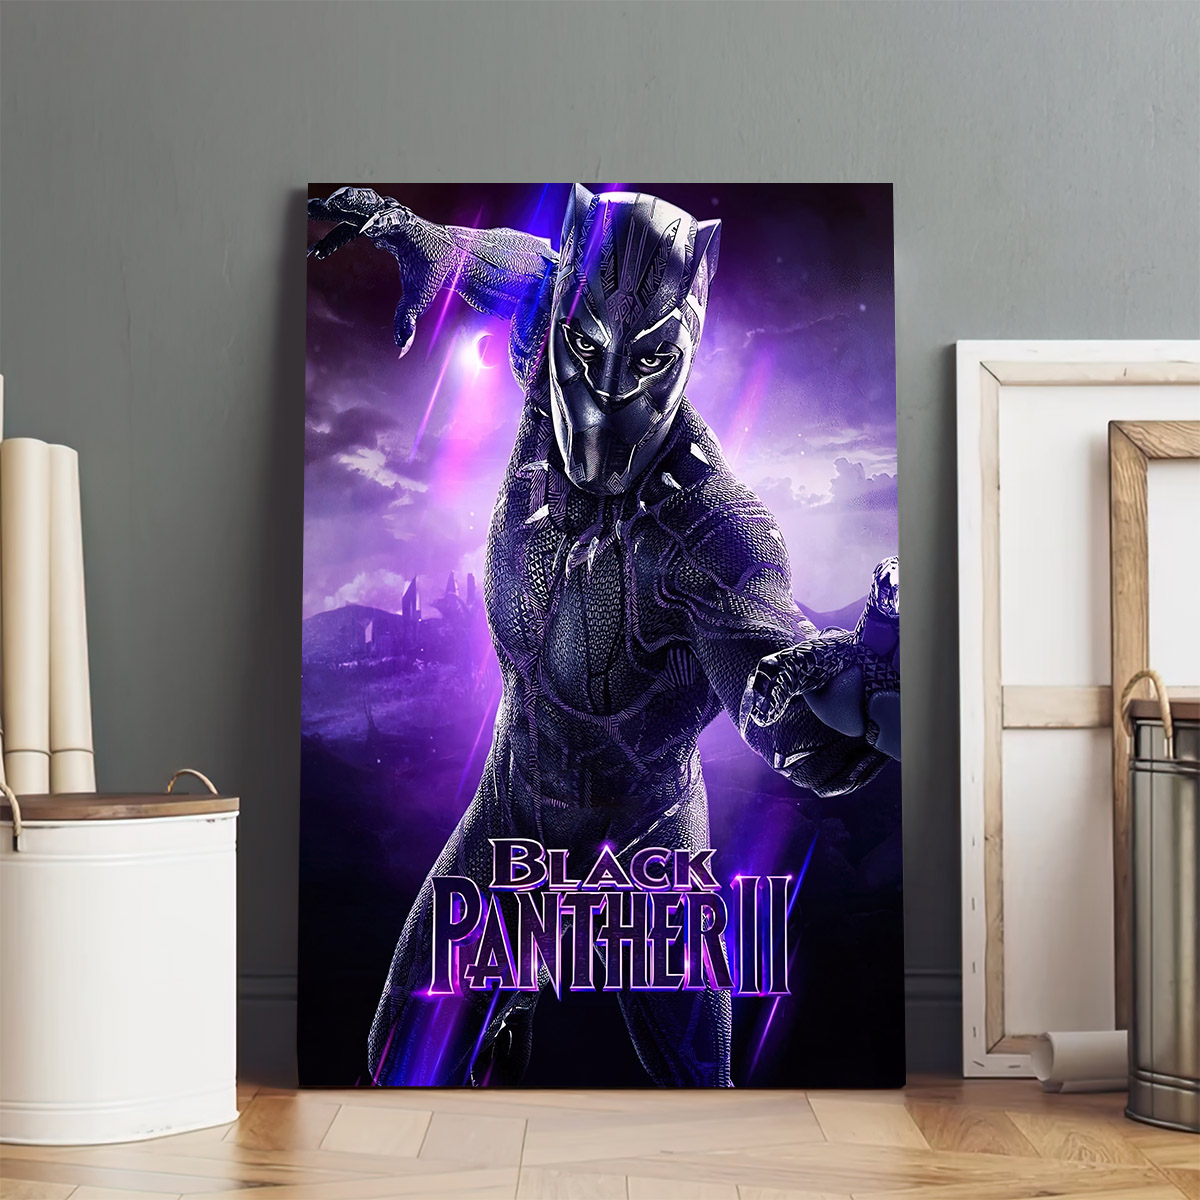 Black Panther 2 Marvel Poster Canvas